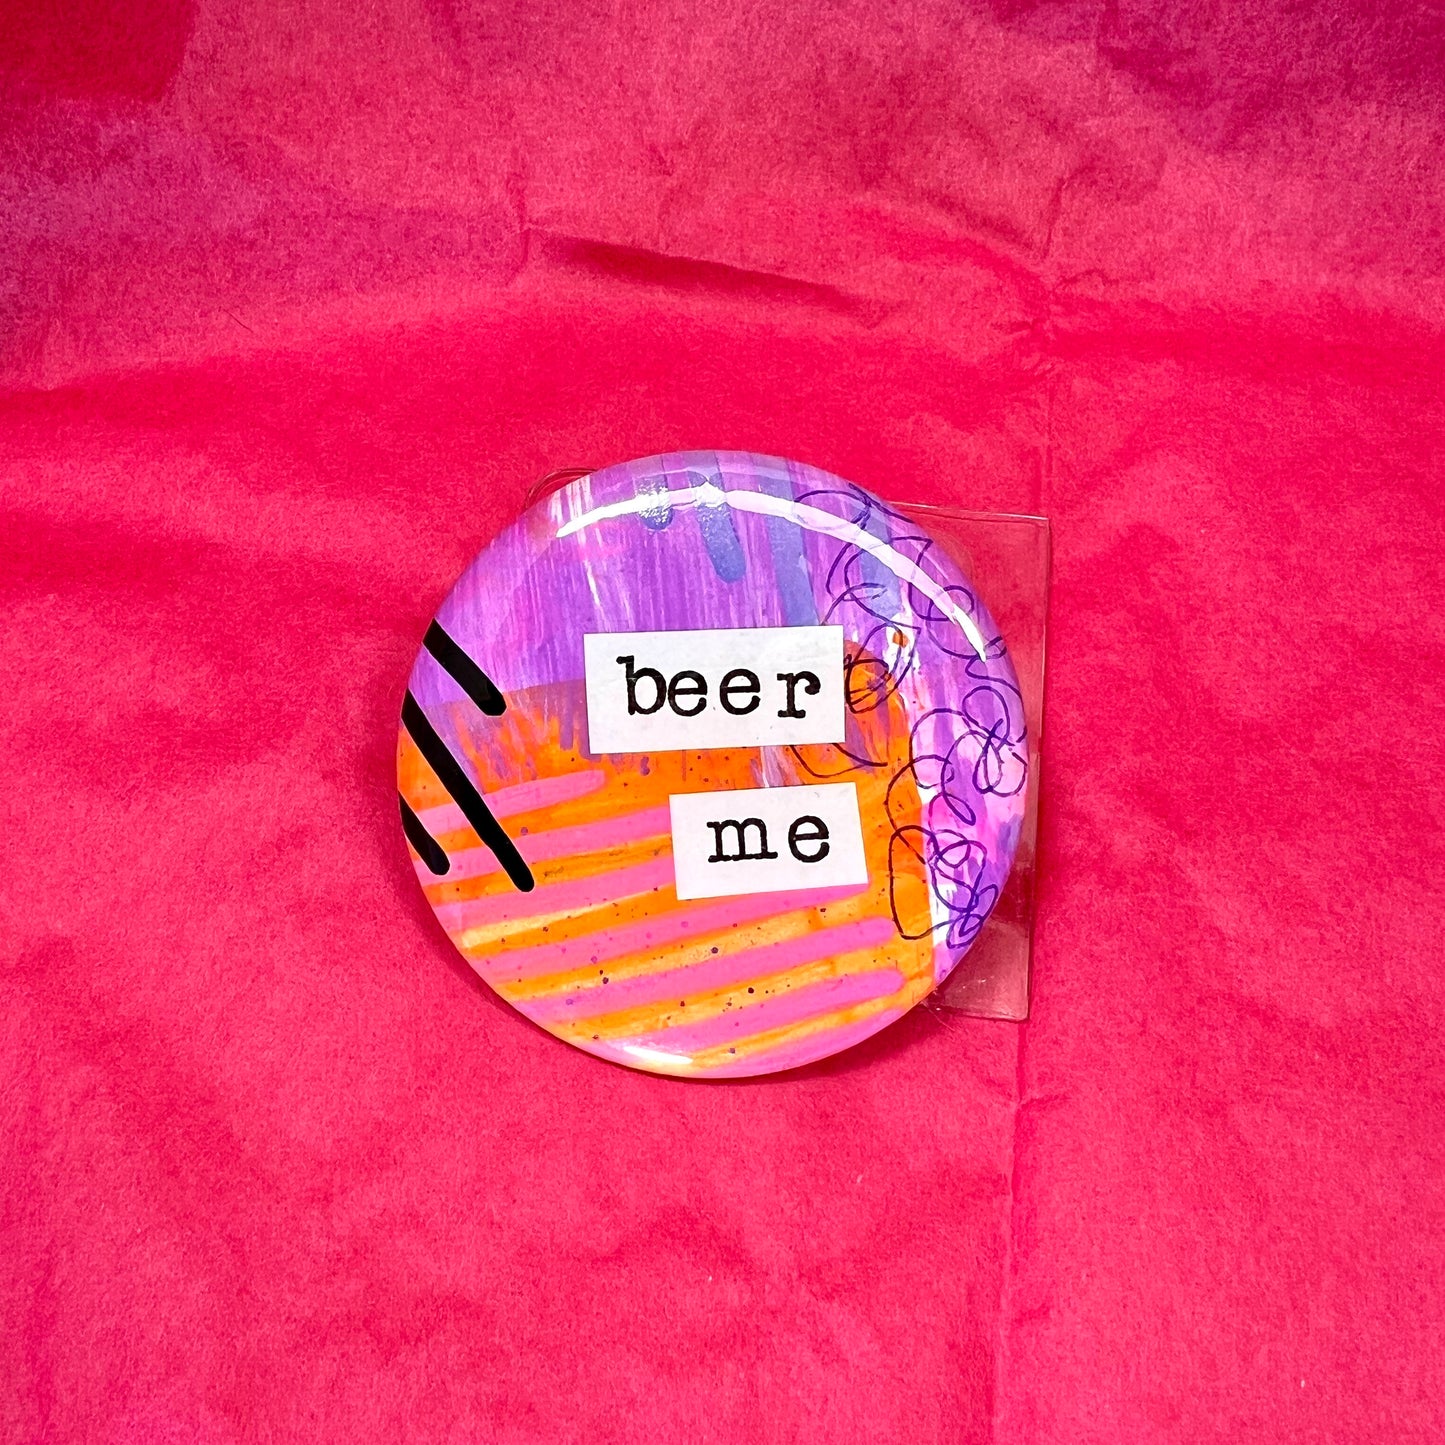 Beer Me - large art pin / magnet